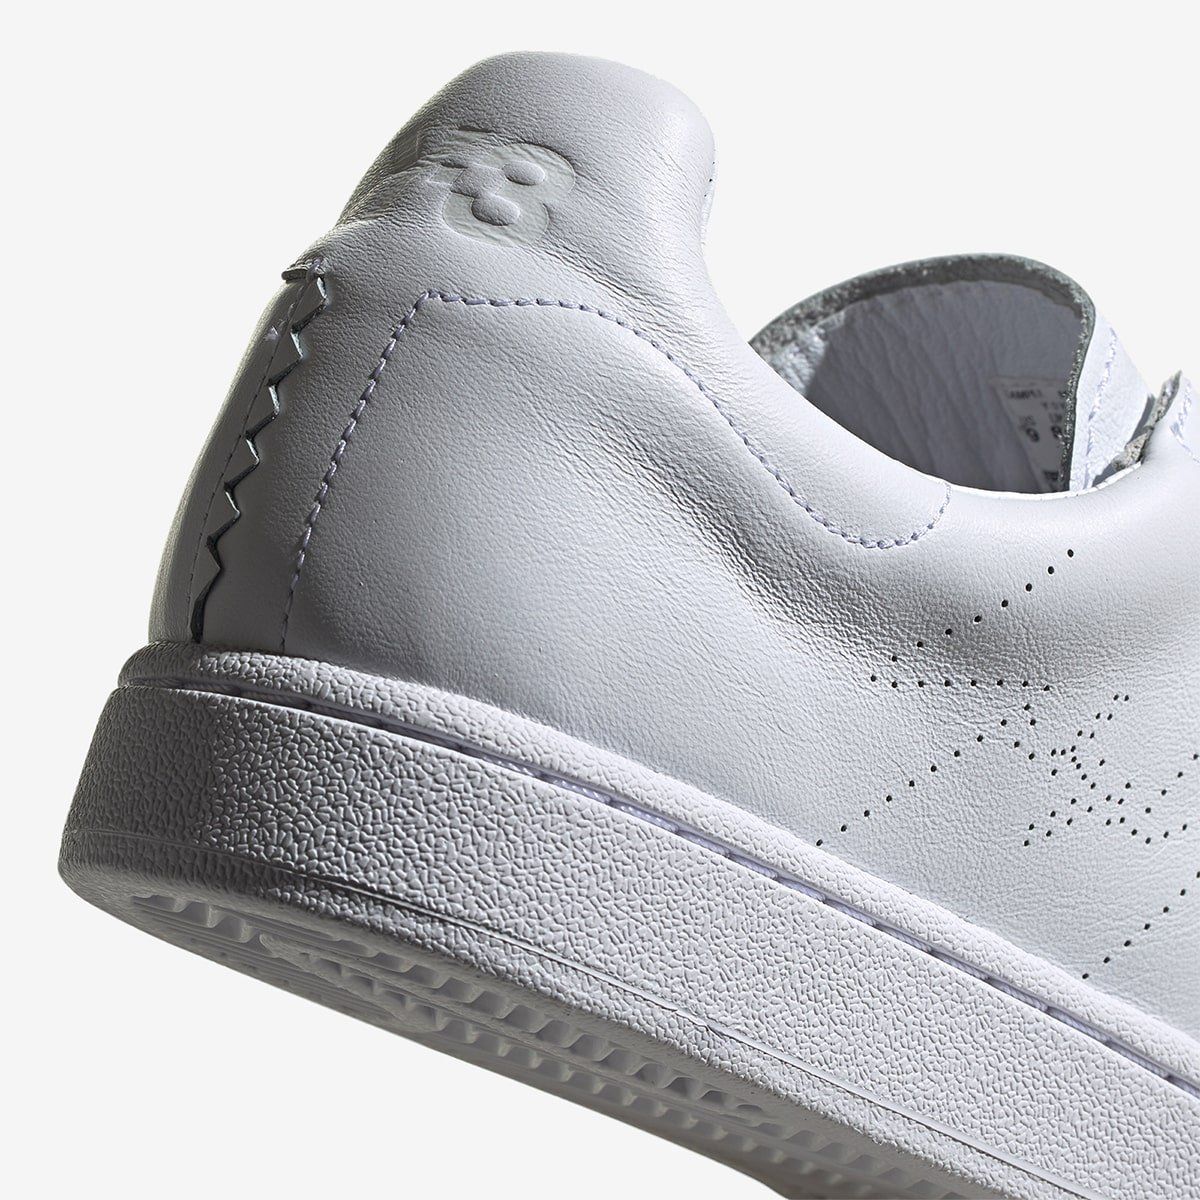 The adidas Y-3 Yohji Court Rocks Triple White this Summer - HOUSE OF HEAT | Sneaker ...1200 x 1200